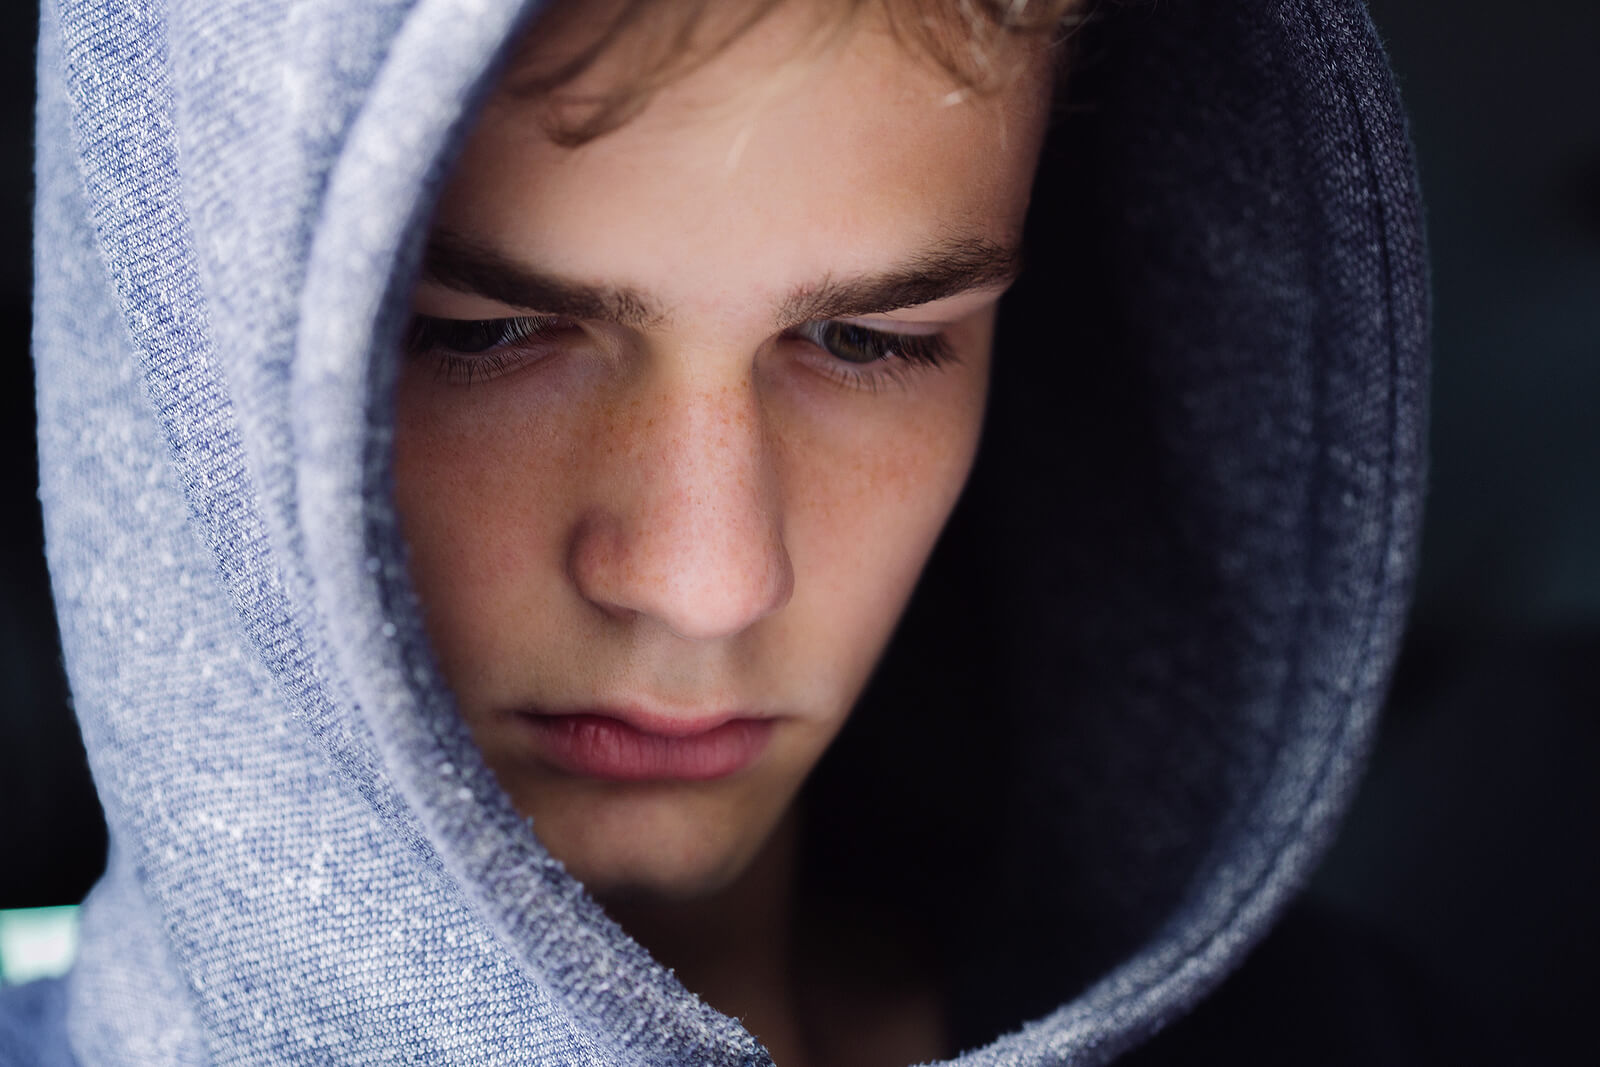 A teen boy wearing a hoodie and looking sad.